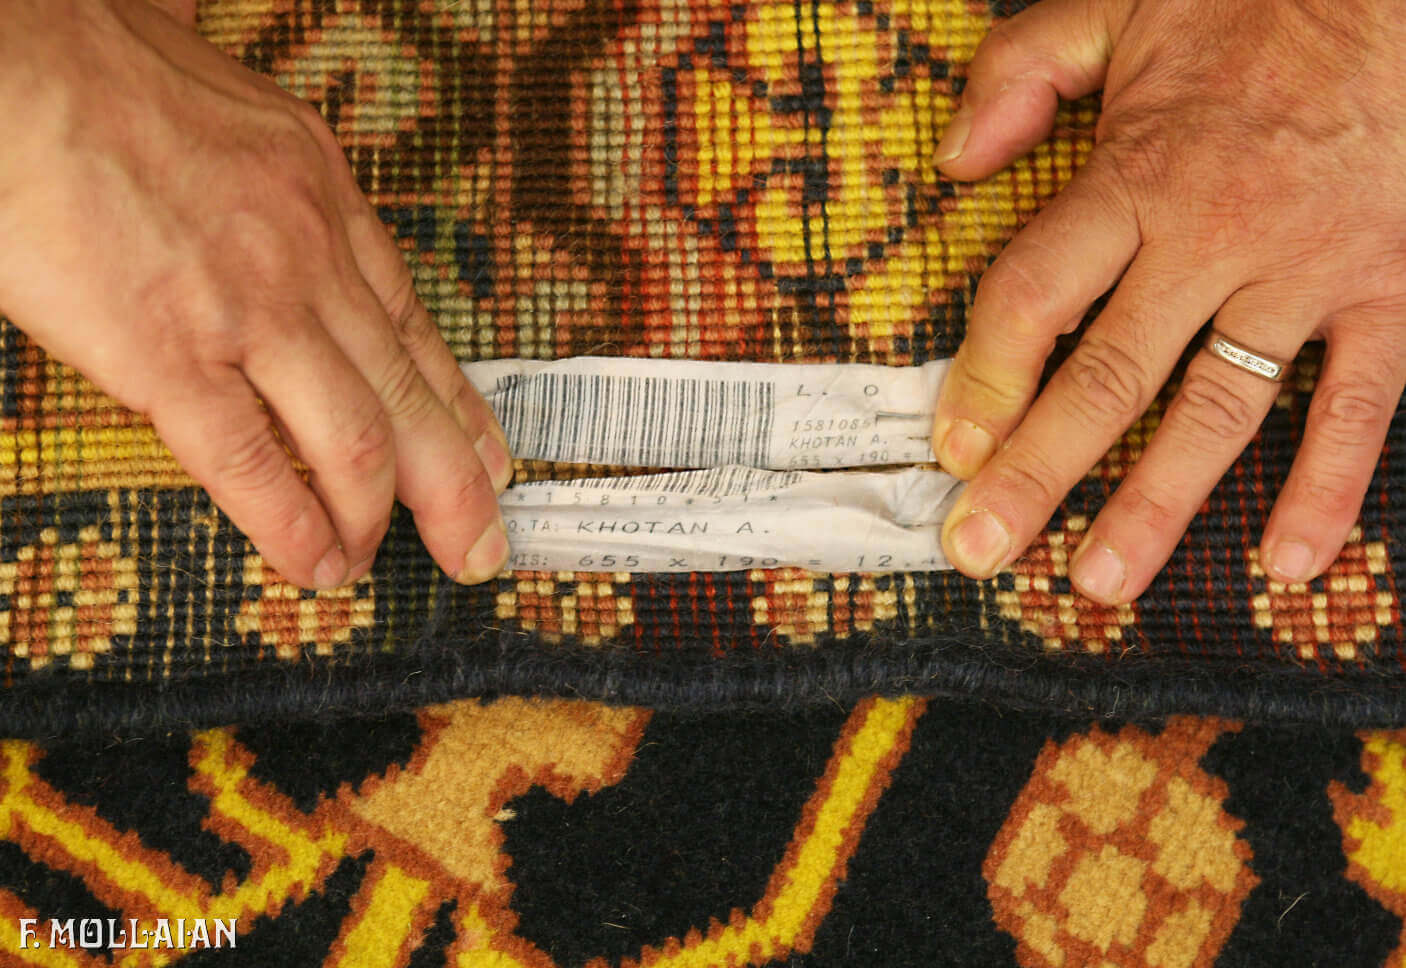 A Kalleh Khotan Antique Carpet n°:15810851